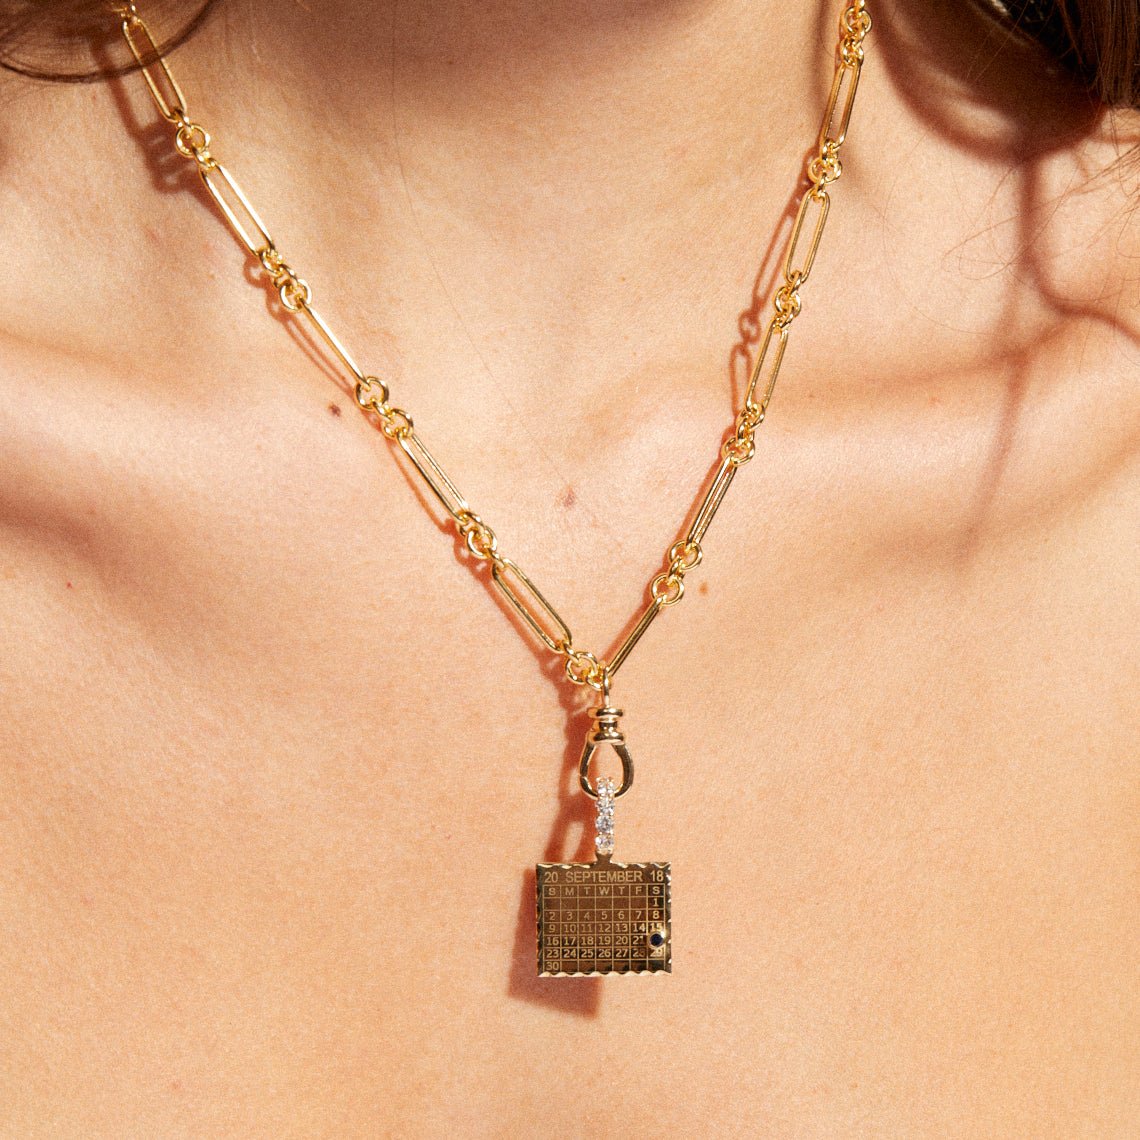 10K Gold Small Swivel Charm Connector - Peridot Fine Jewelry - Zahava